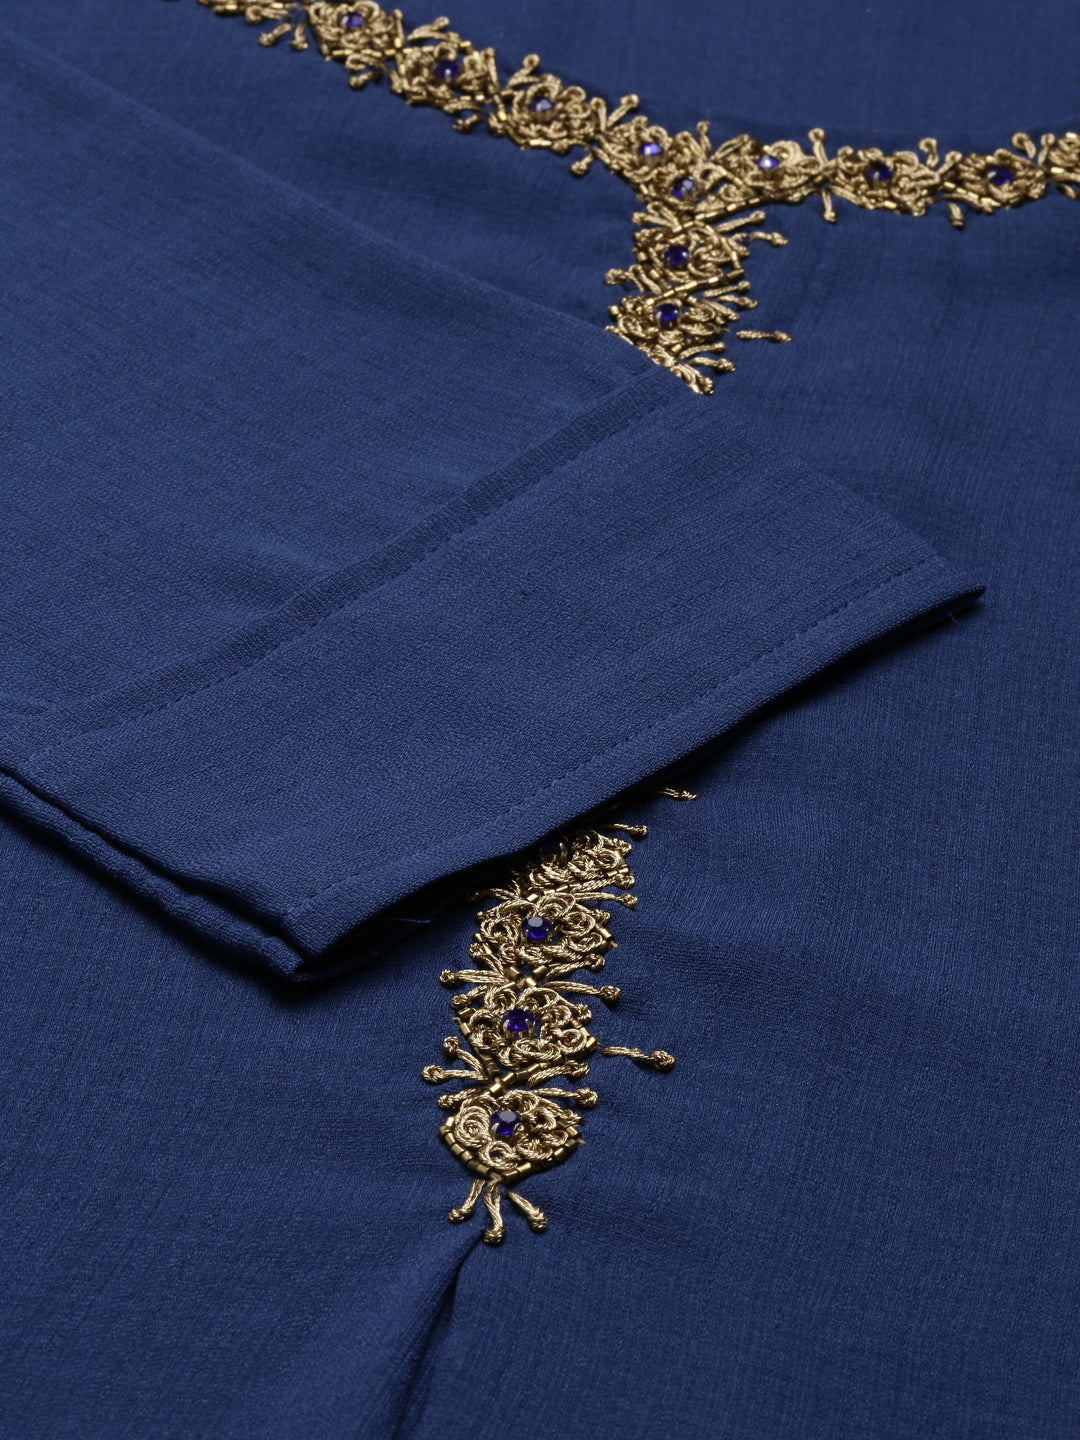 Neeru's Royal Blue Color Slub Riyon Fabric Kurta